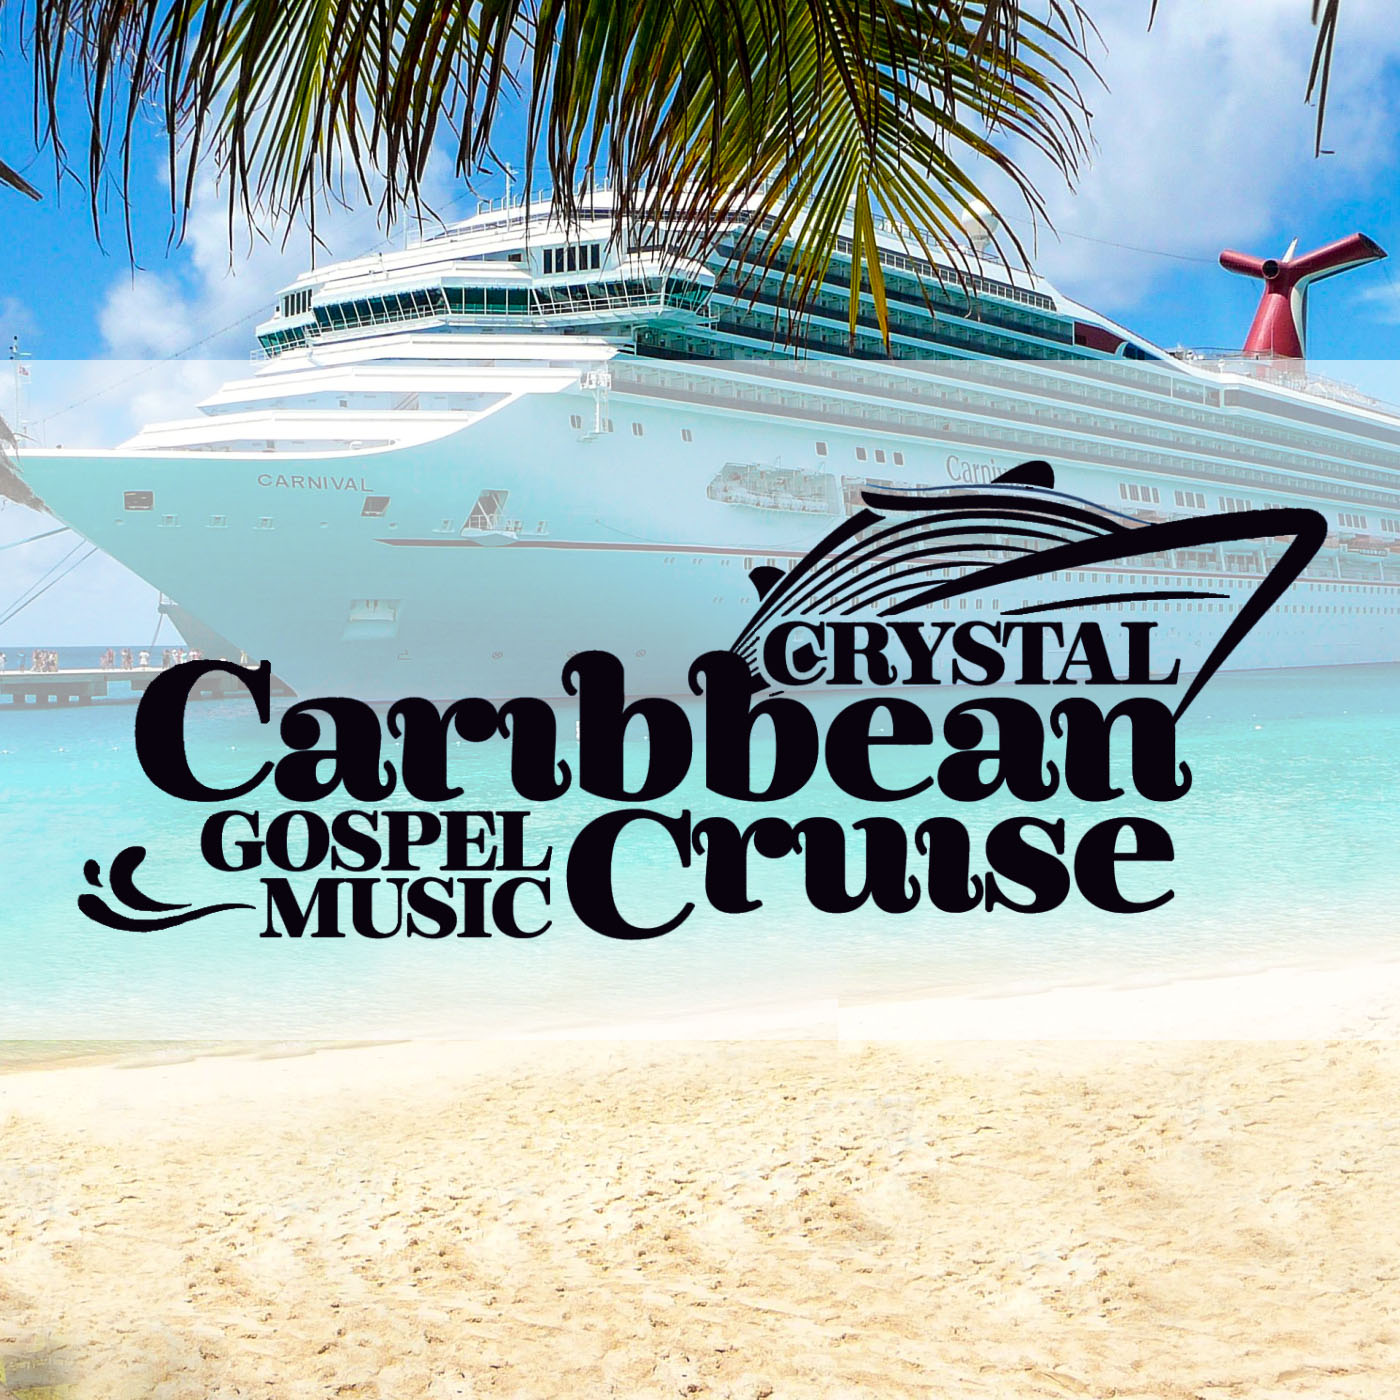 Crystal Caribbean Cruise | Abraham Productions